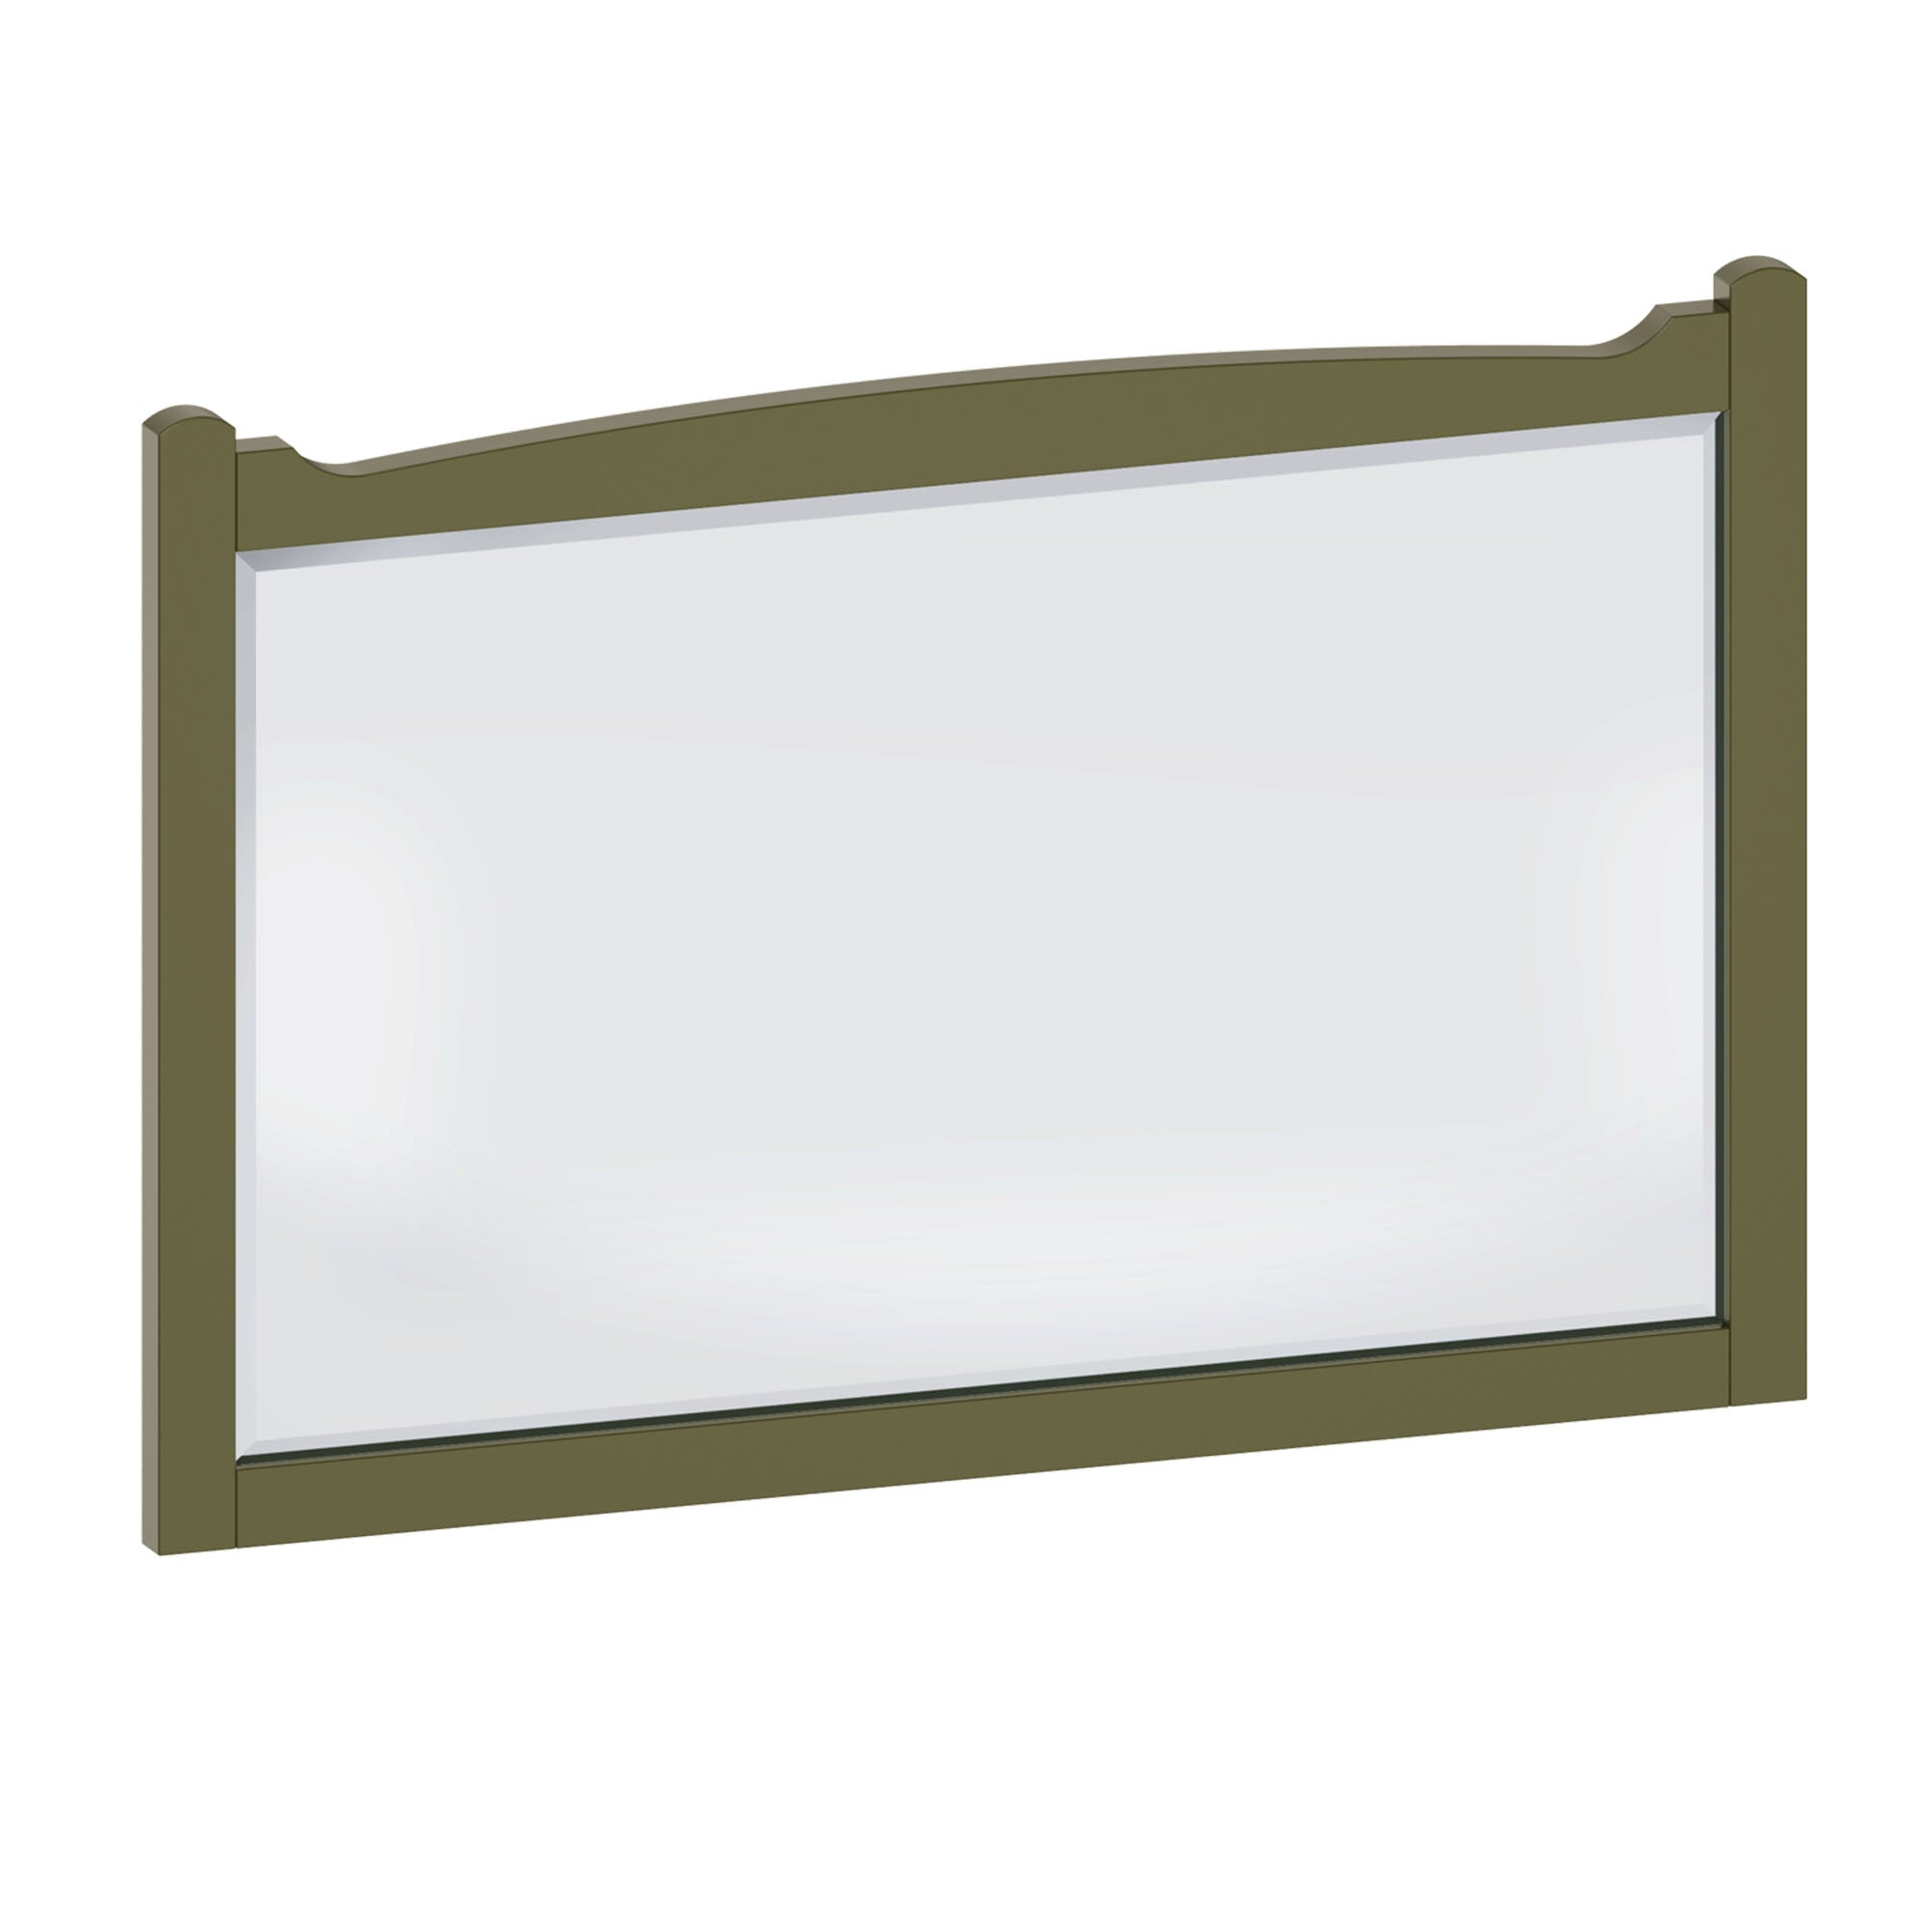 burlington guild 850 framed bathroom mirror carlyle green